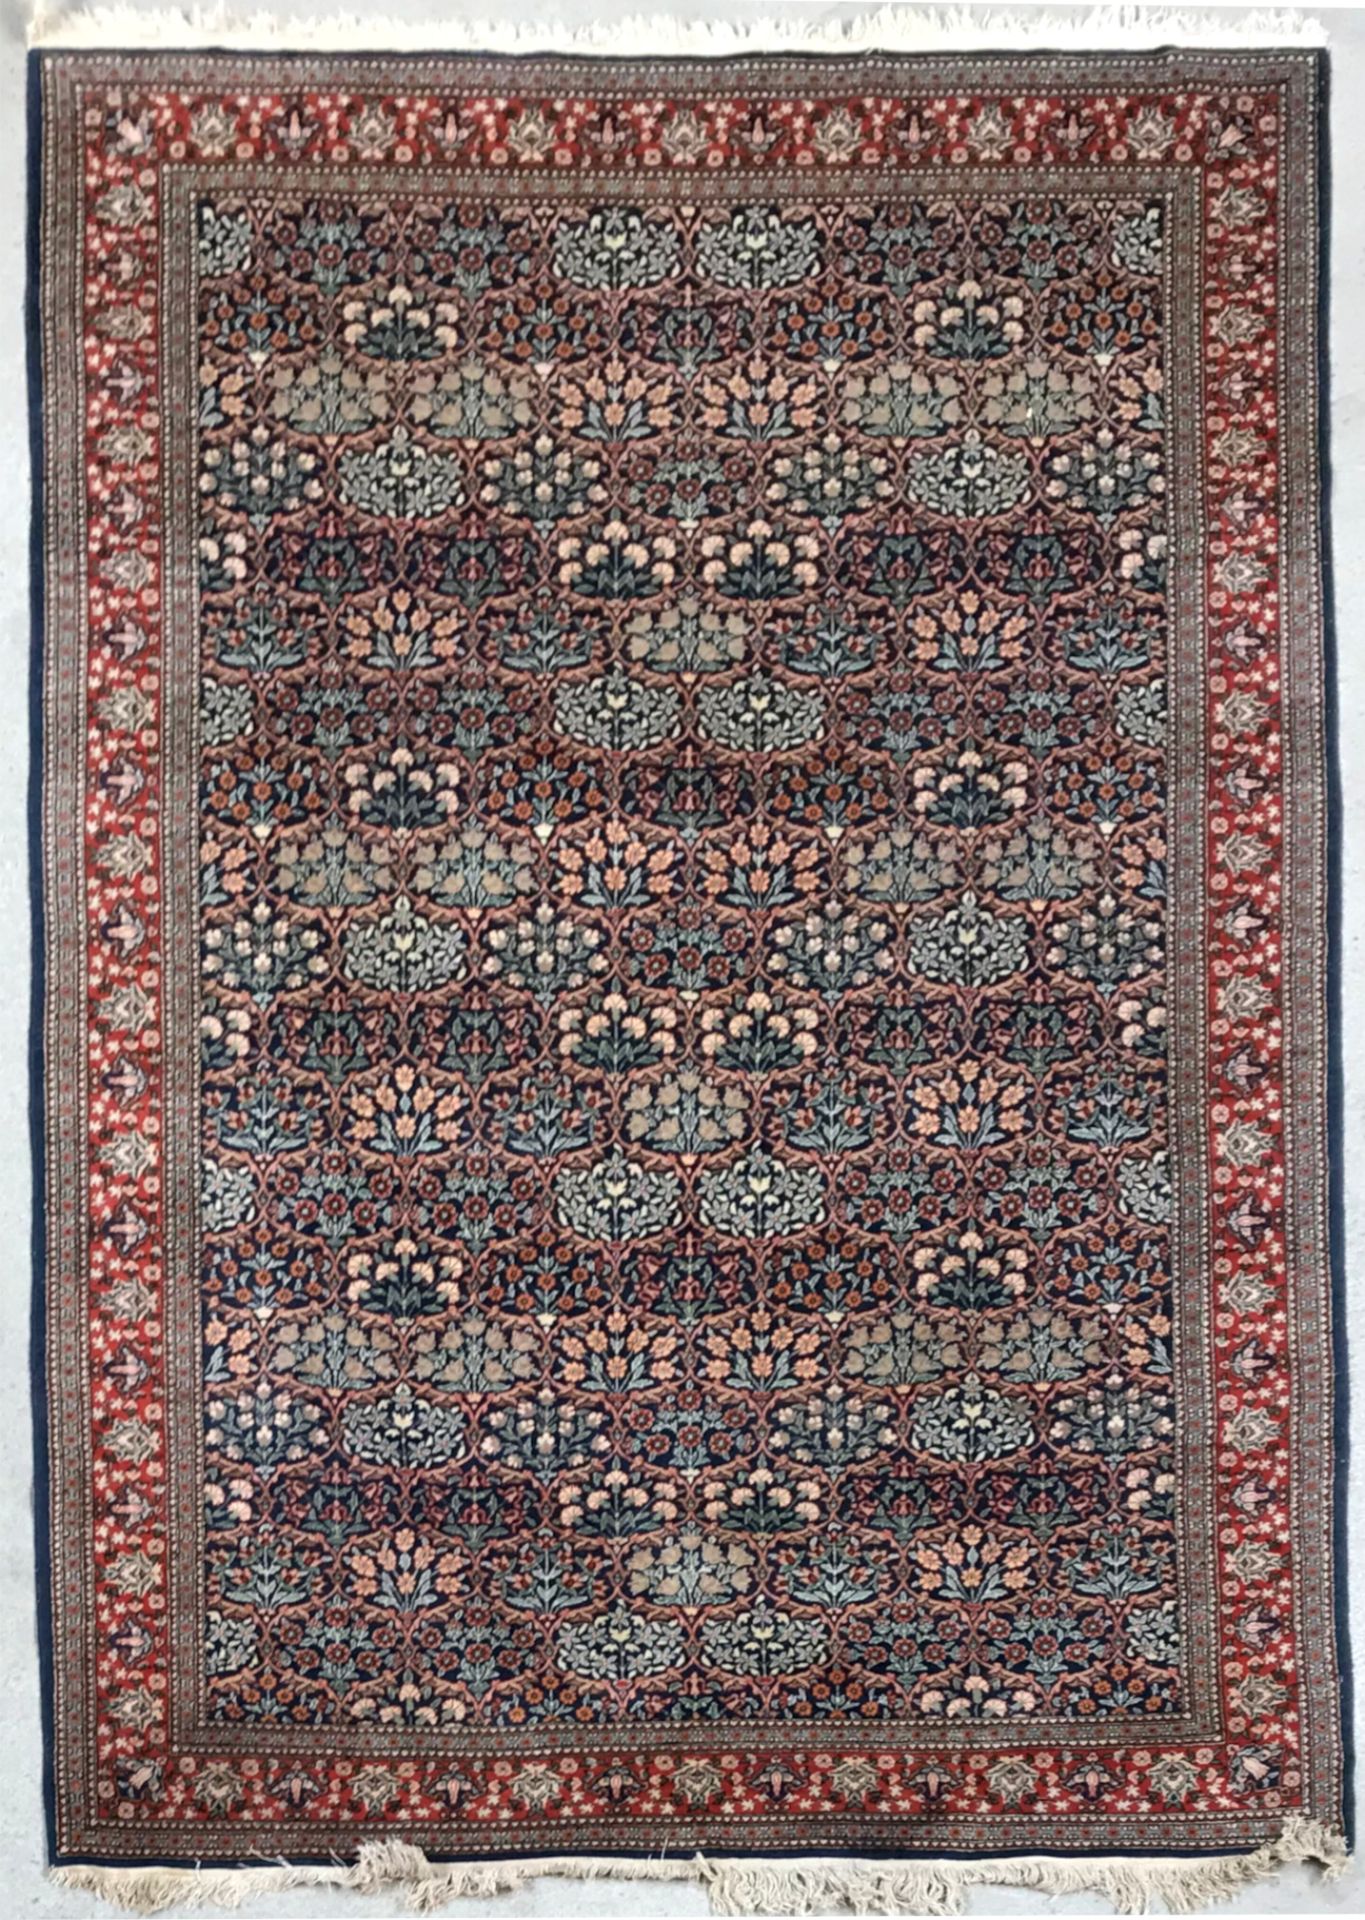 Null 波斯地毯上有蓝色领域的米勒费里装饰。在两个辫子之间的红色背景上的花边。

280 x 180 cm